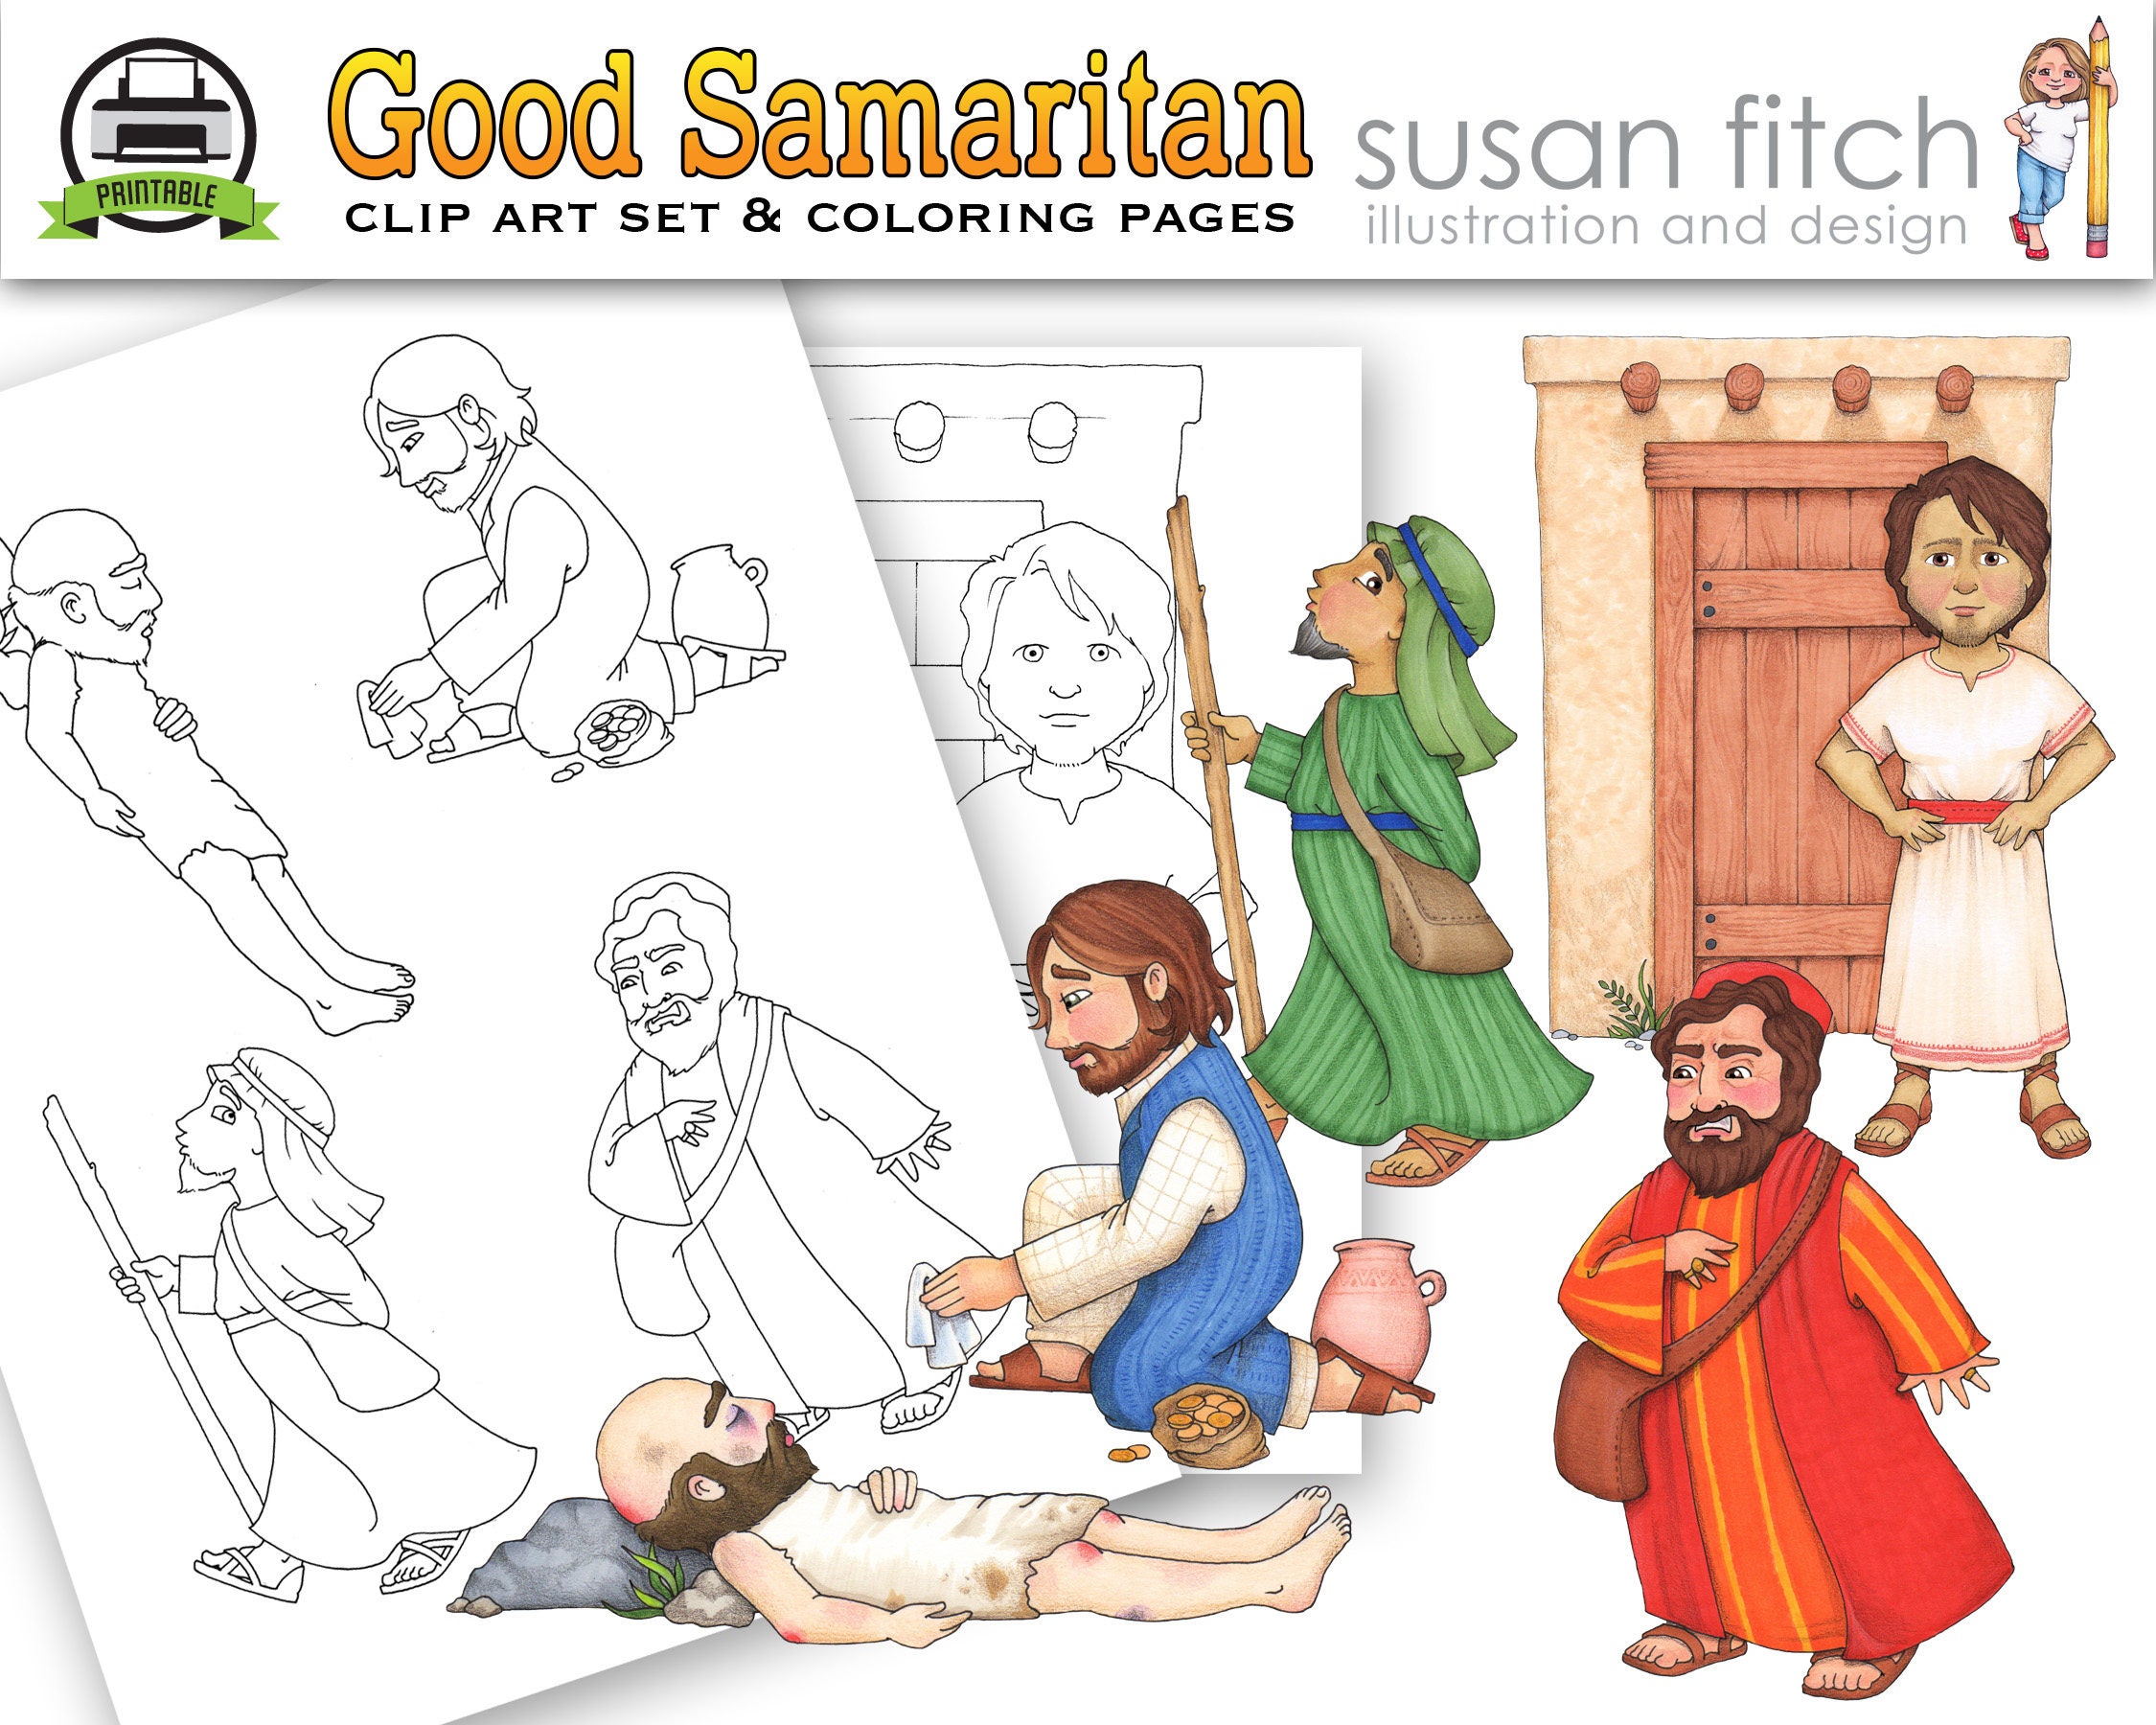 Download Good Samaritan clip art & coloring pages